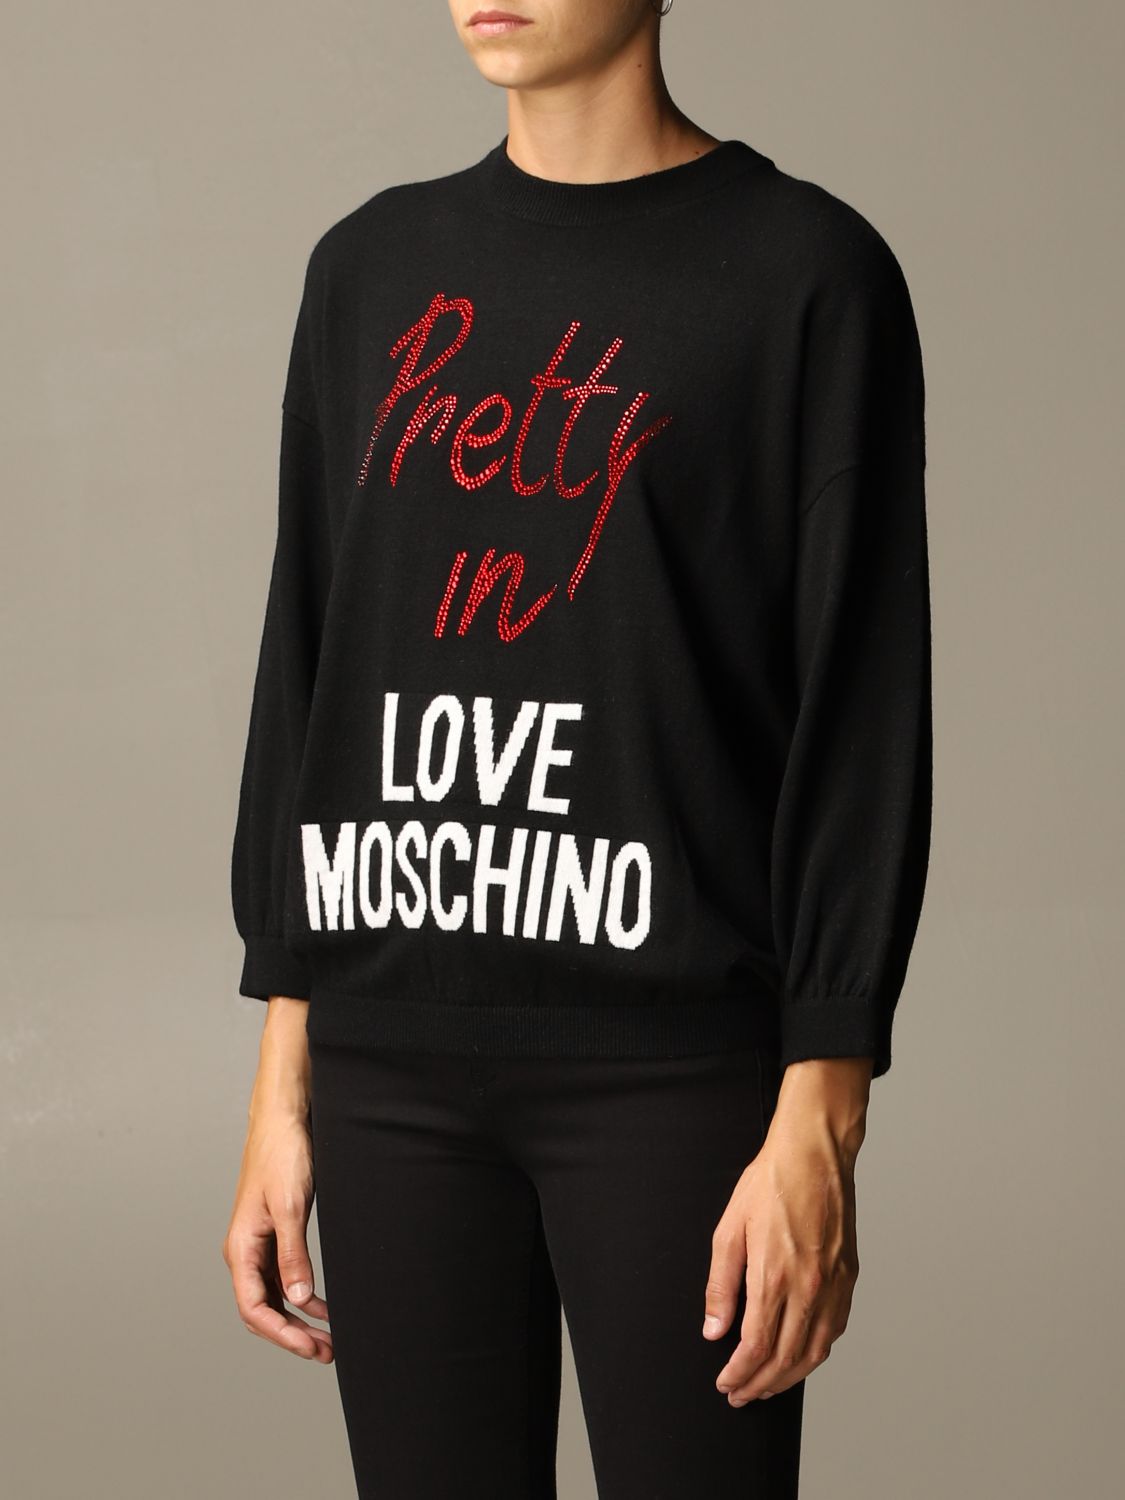 Love Moschino sweater in wool blend with rhinestone logo